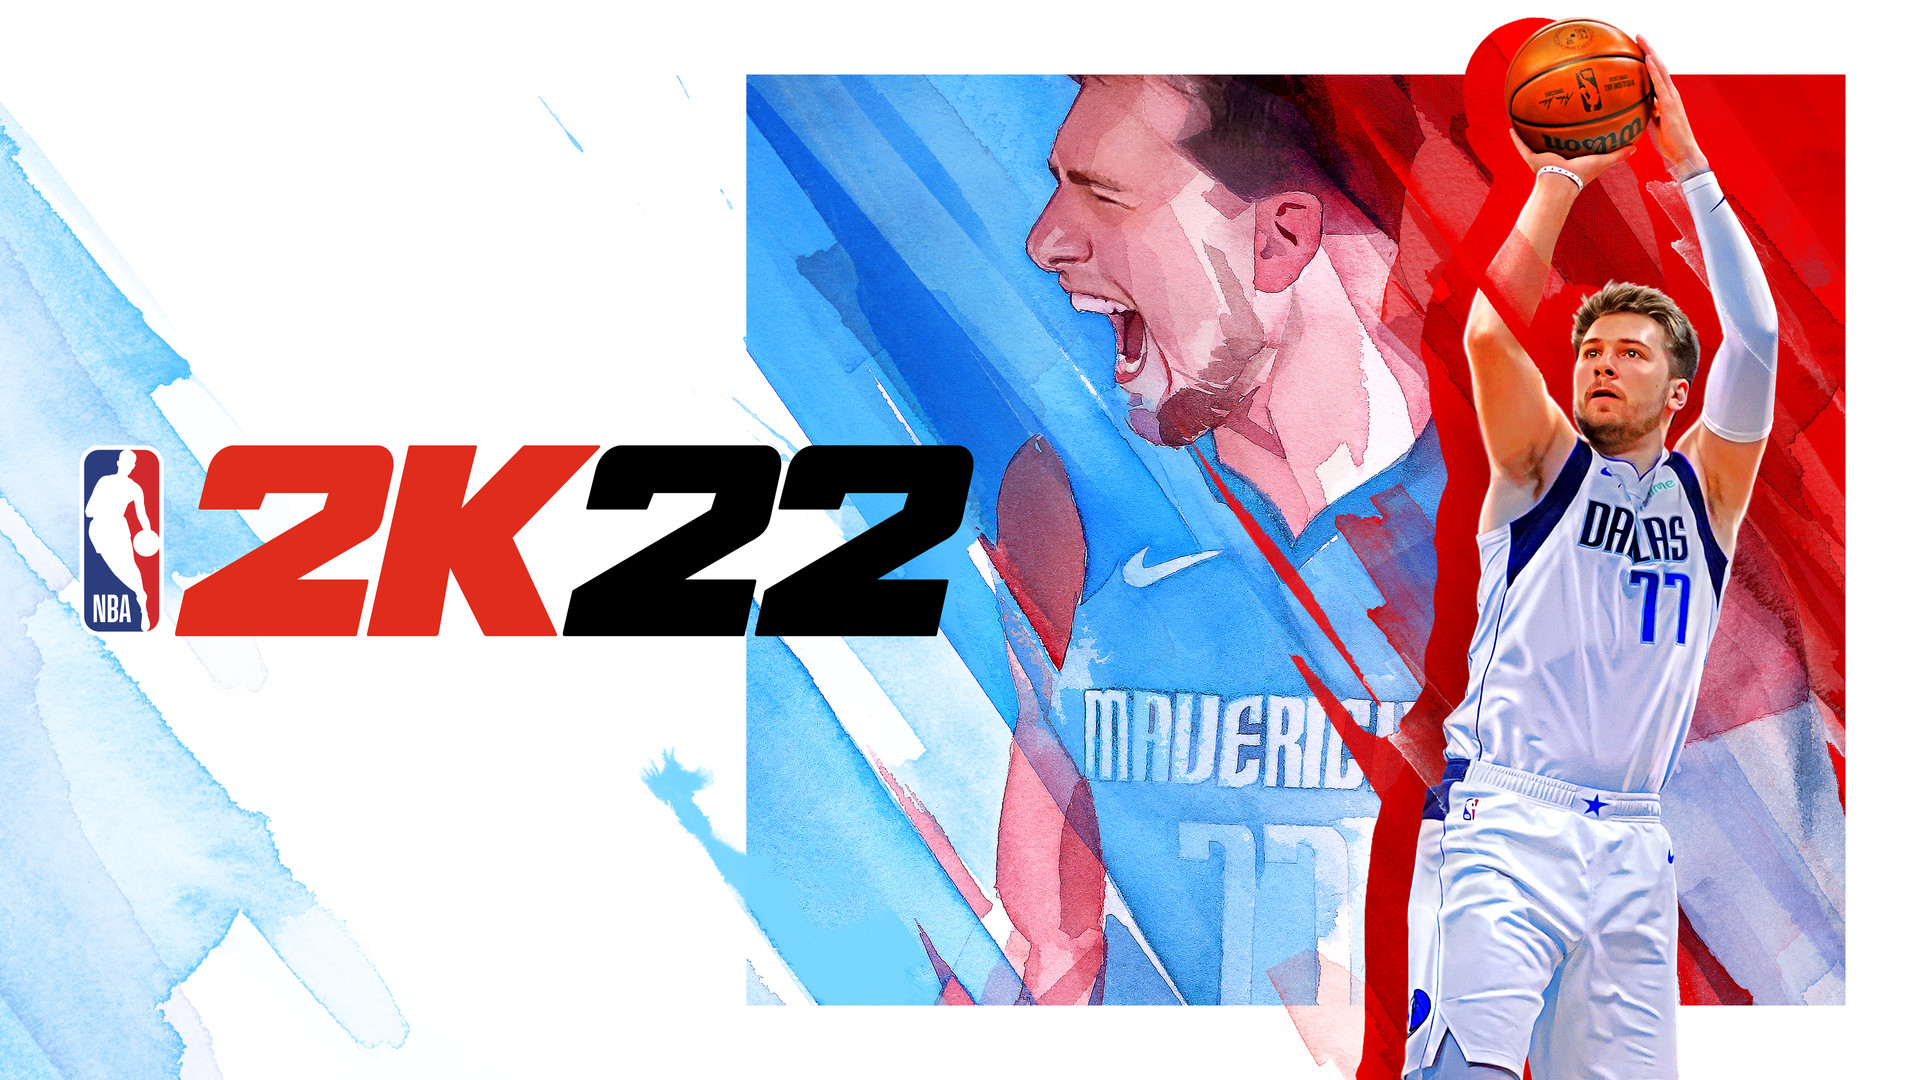 NBA 2K22: NBA 75th Anniversary Edition Steam CD Key